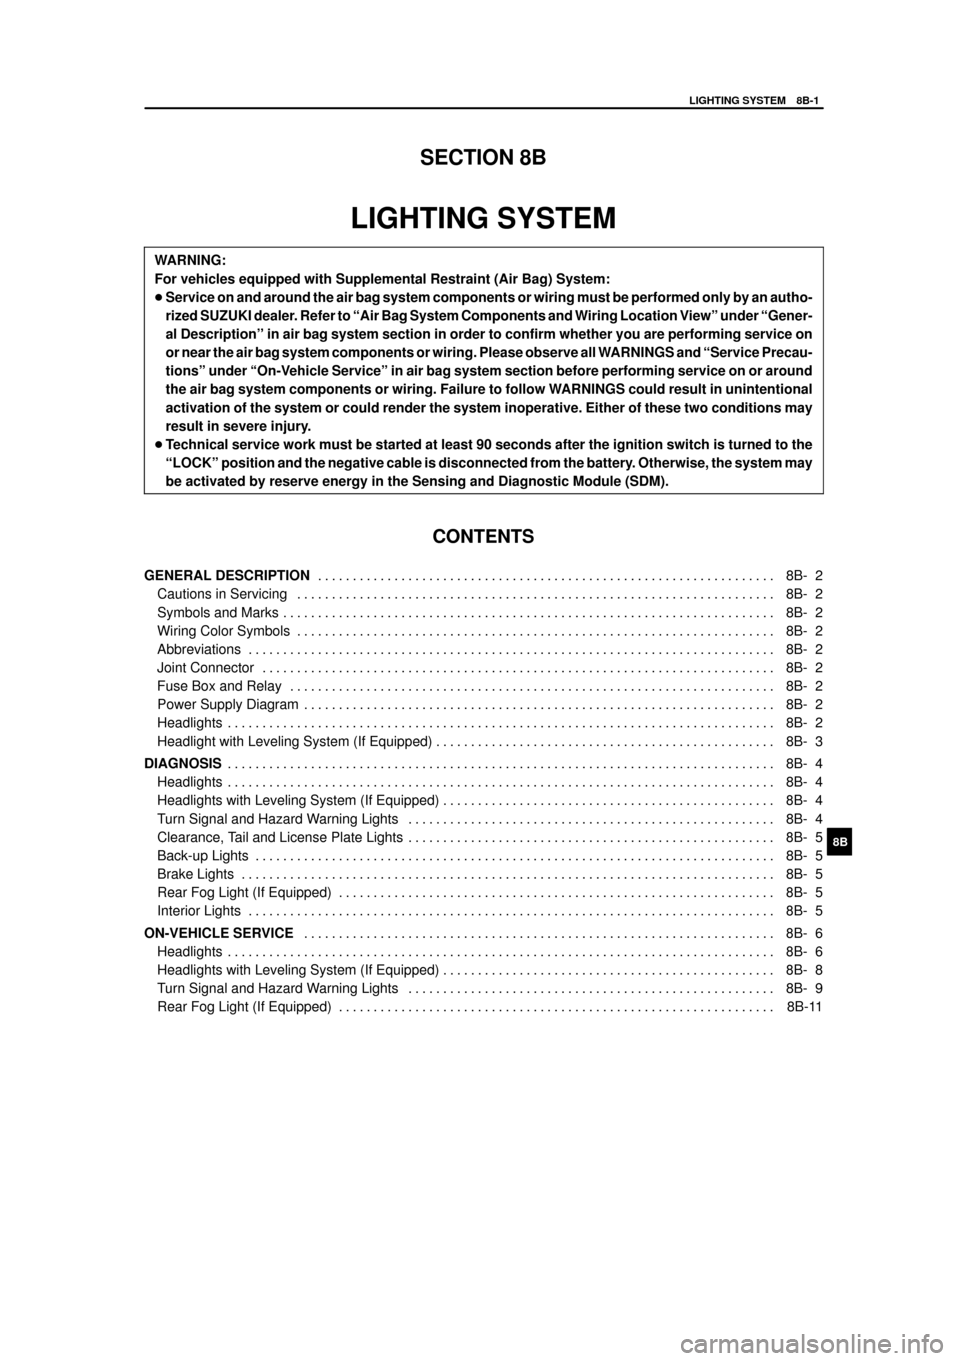 SUZUKI GRAND VITARA 1998 2.G Service Workshop Manual YH4
GRAND
VITARA
8B
LIGHTING SYSTEM 8B-1
SECTION 8B
LIGHTING SYSTEM
WARNING:
For vehicles equipped with Supplemental Restraint (Air Bag) System:
Service on and around the air bag system components or